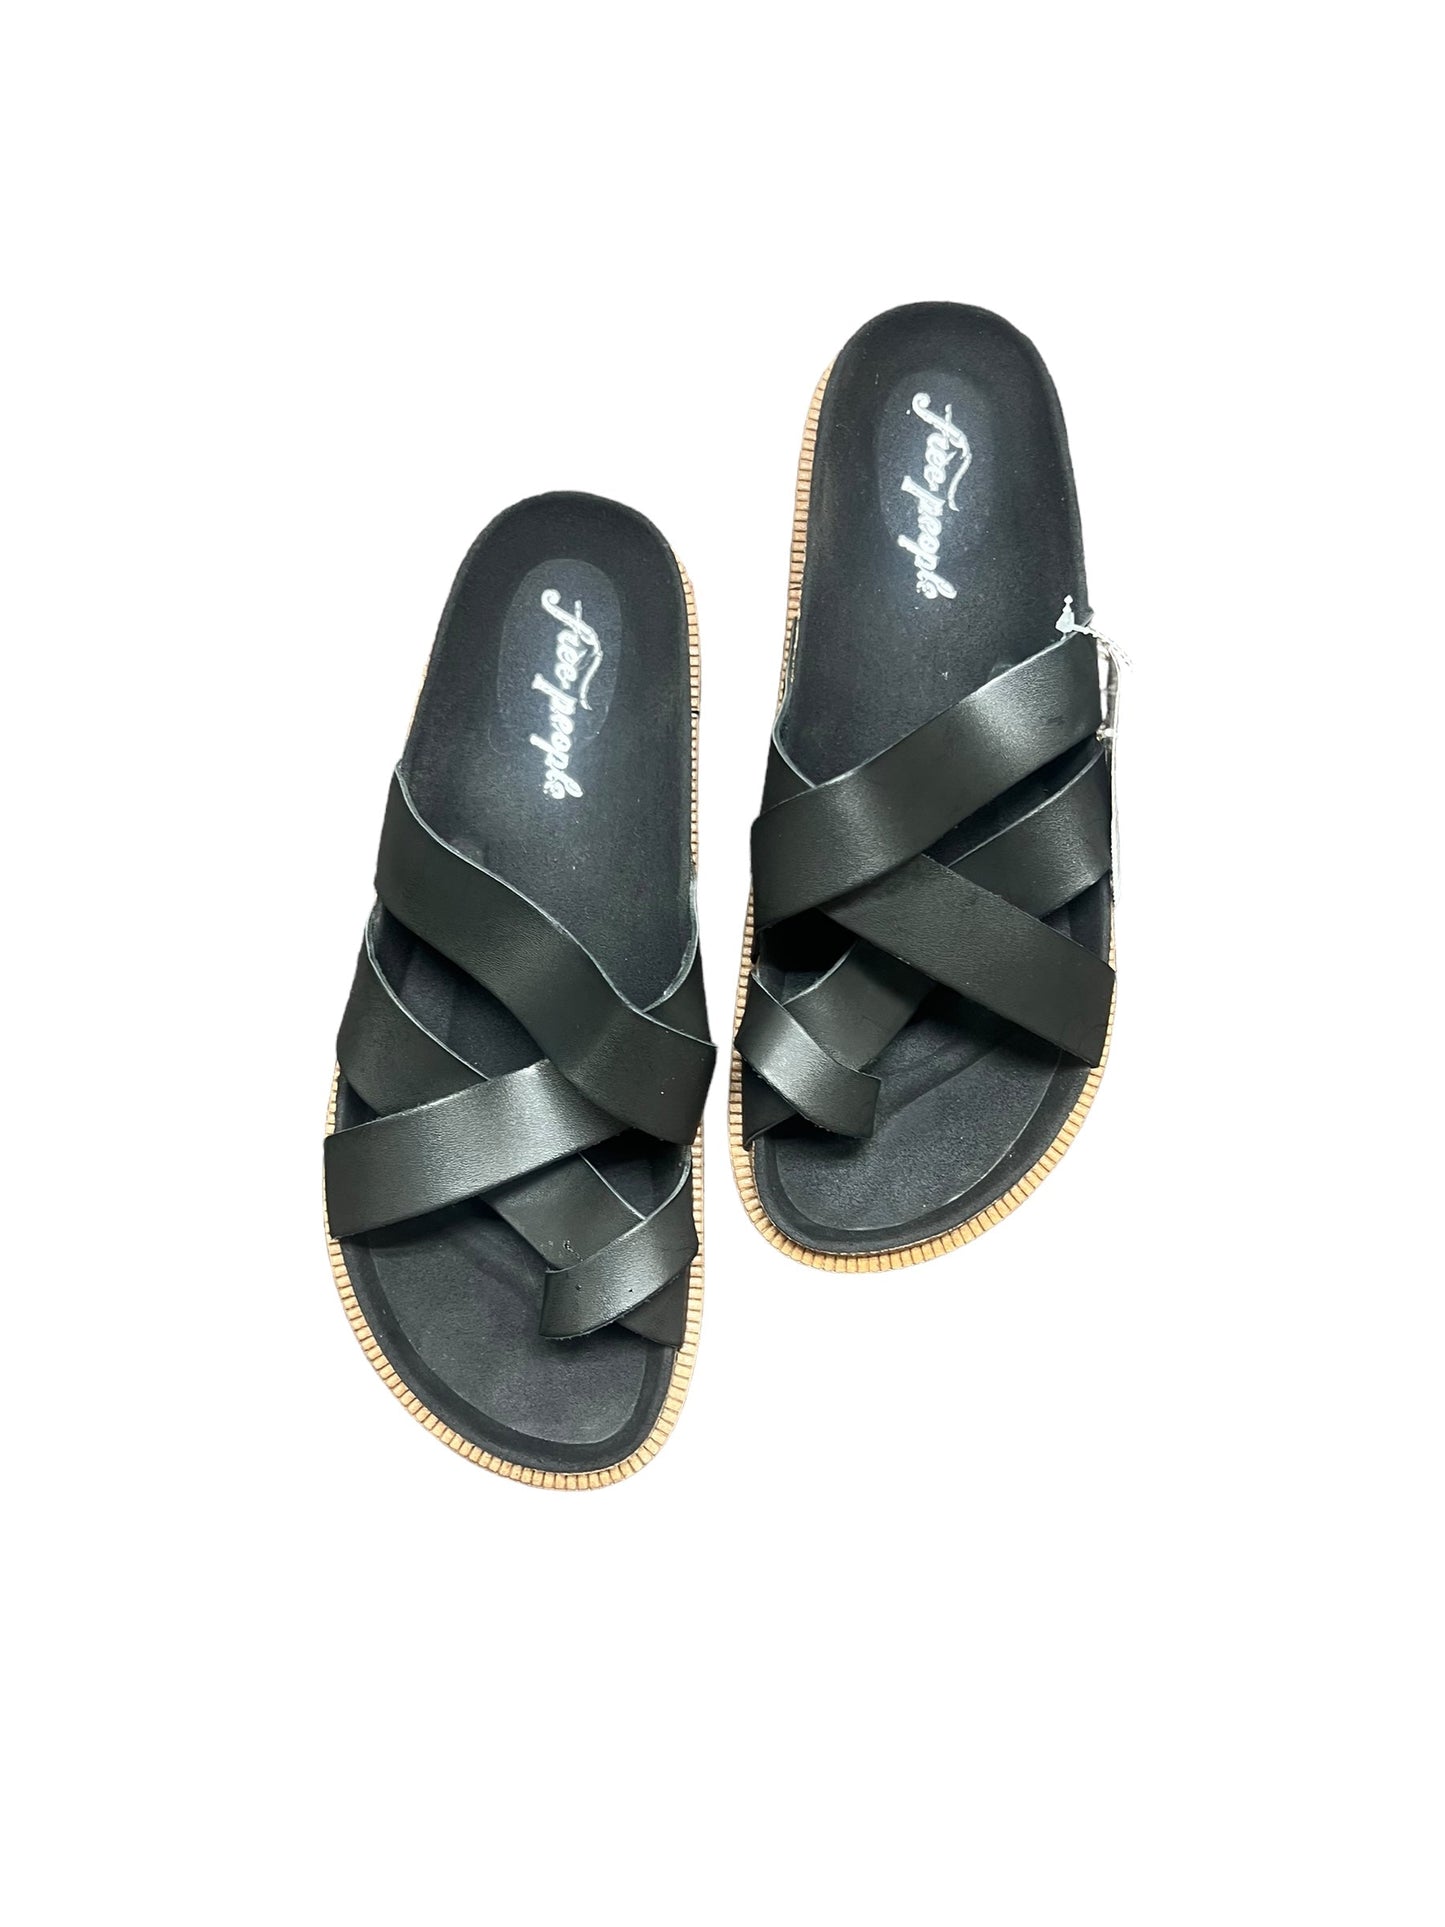 Black Sandals Flats Free People, Size 8.5